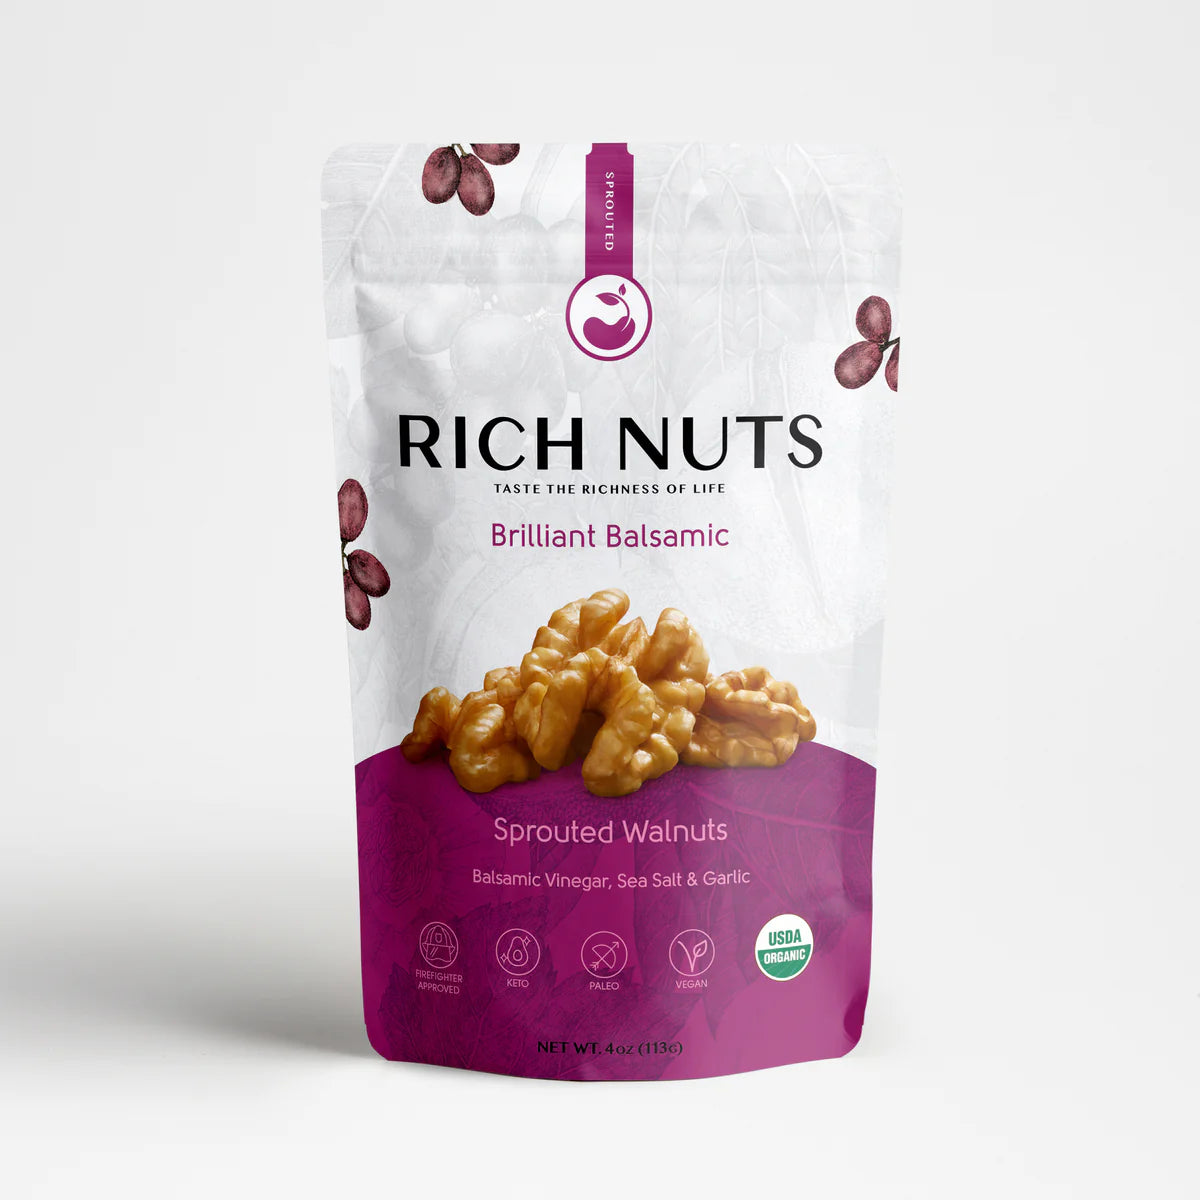 Rich Nuts- Brilliant Balsamic